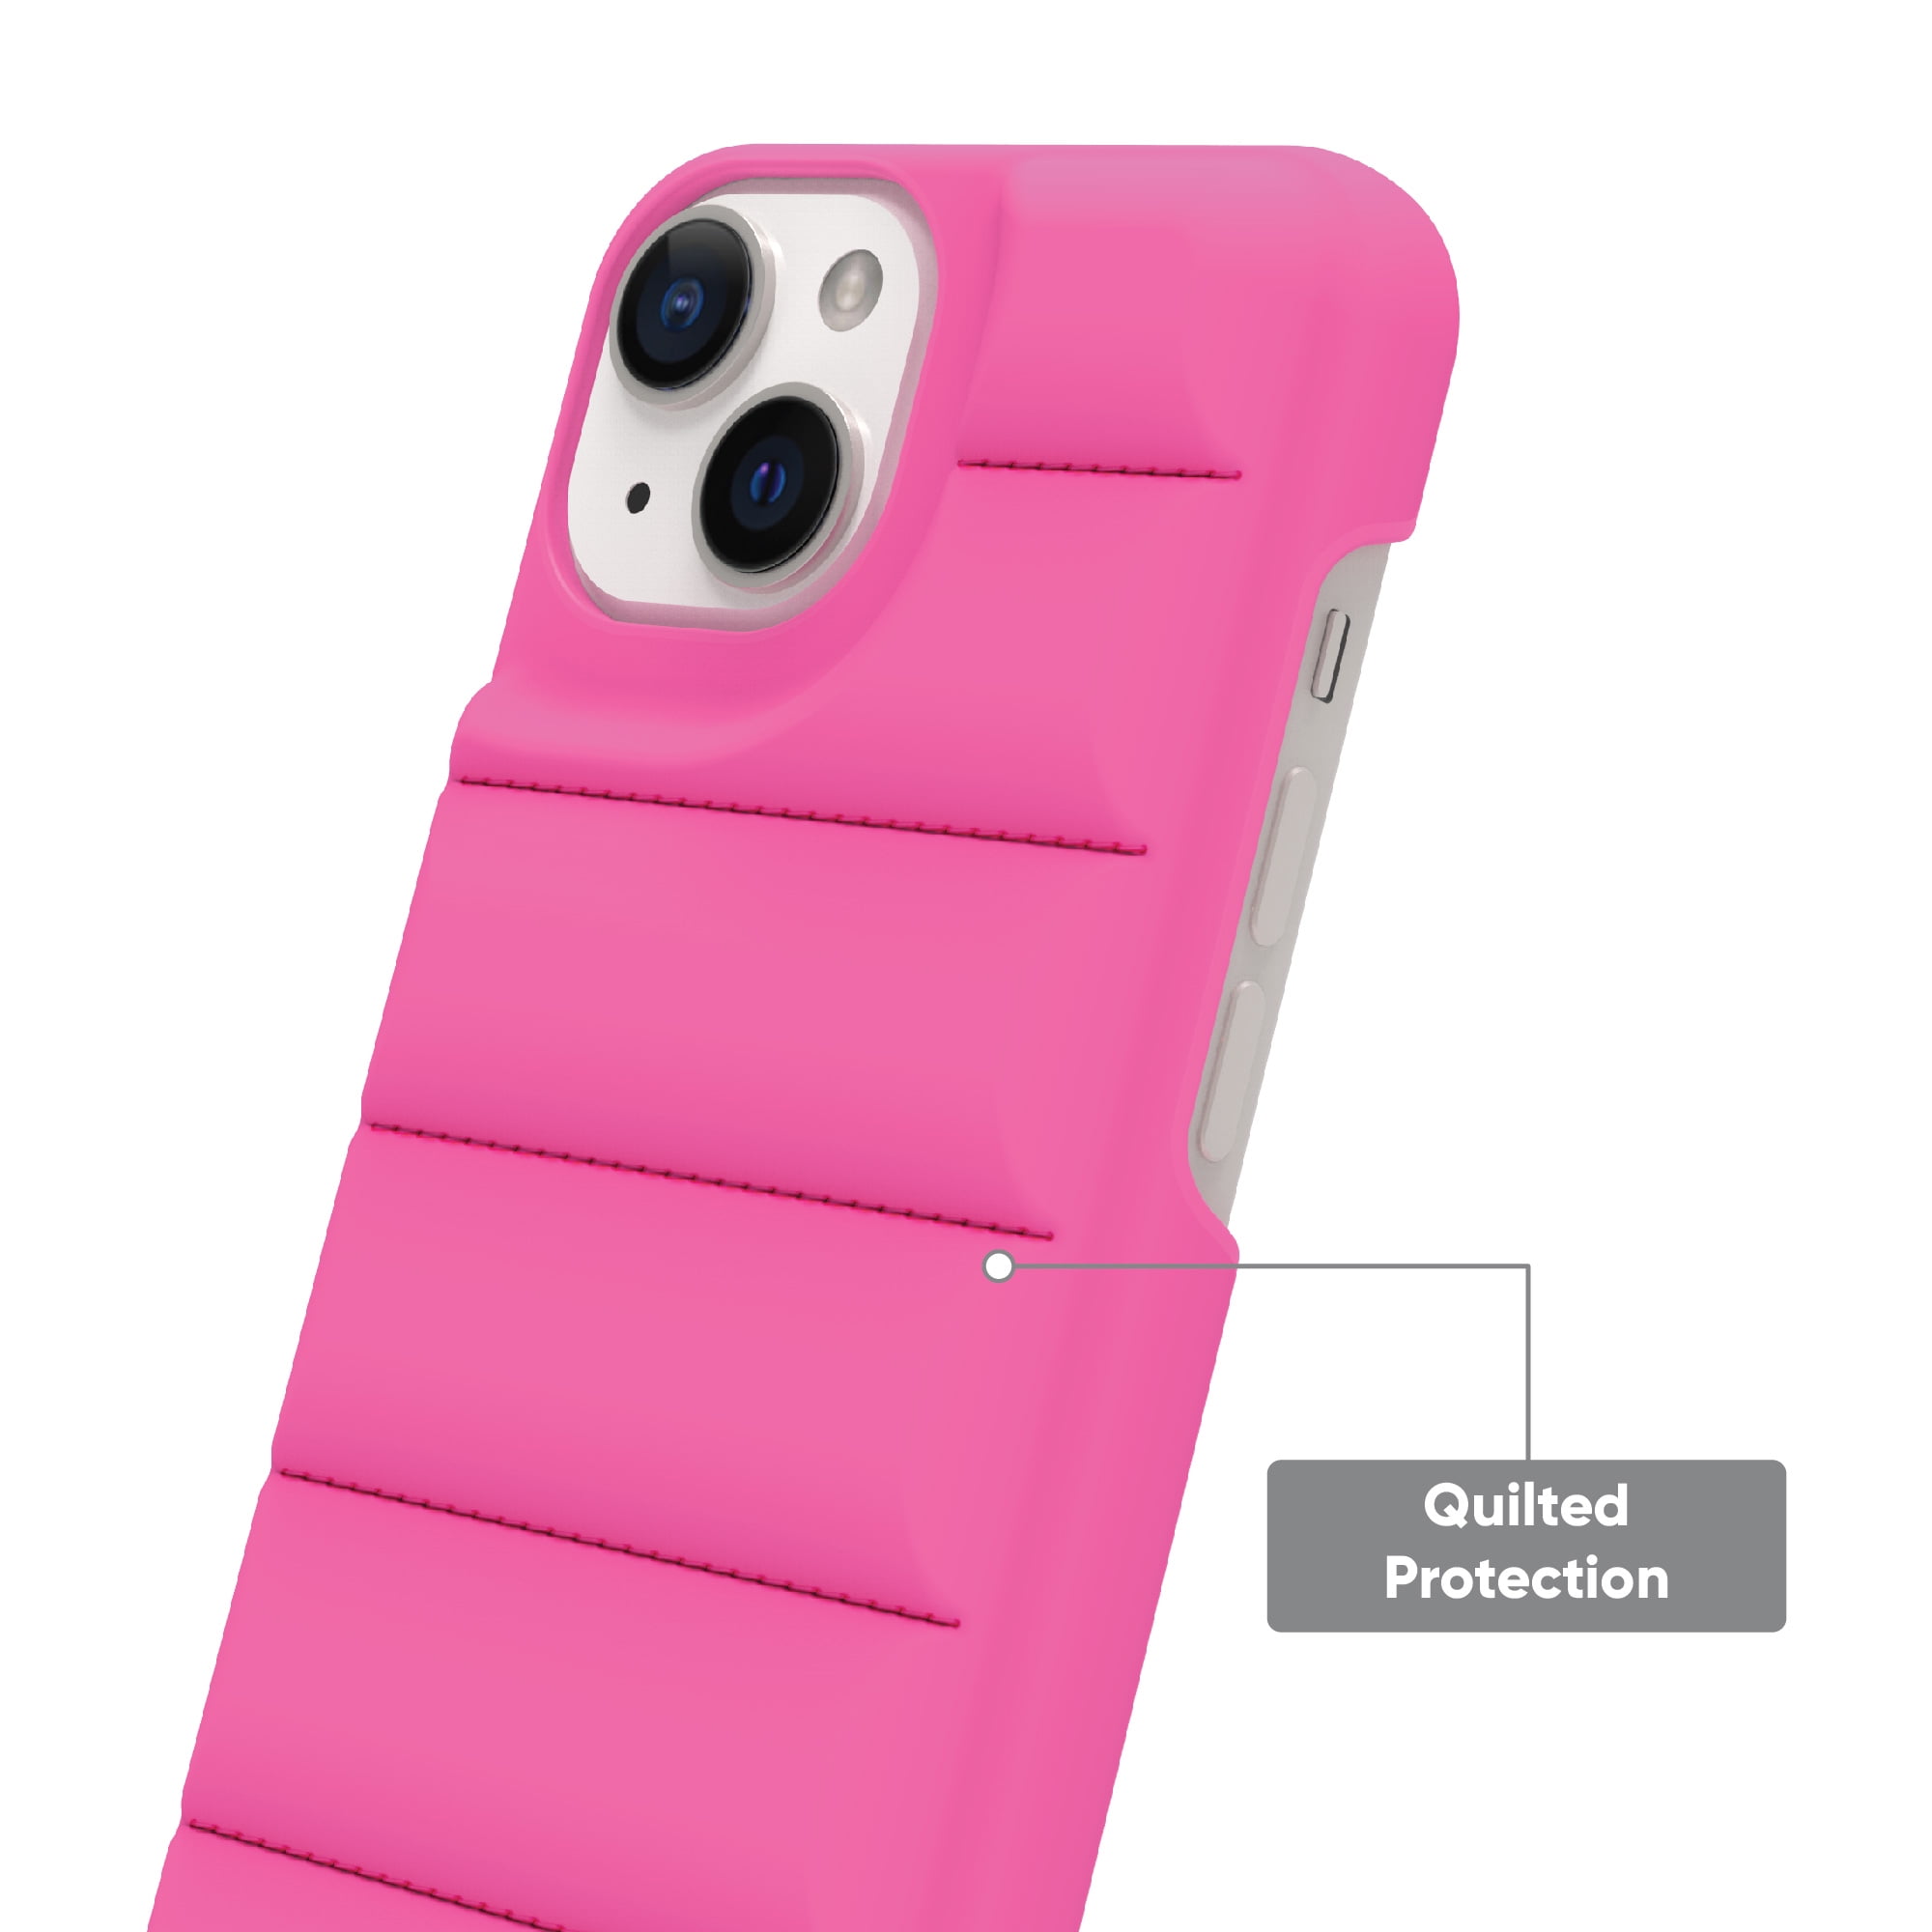 Pink Bubble Wrap iPhone Case for Sale by phantastique